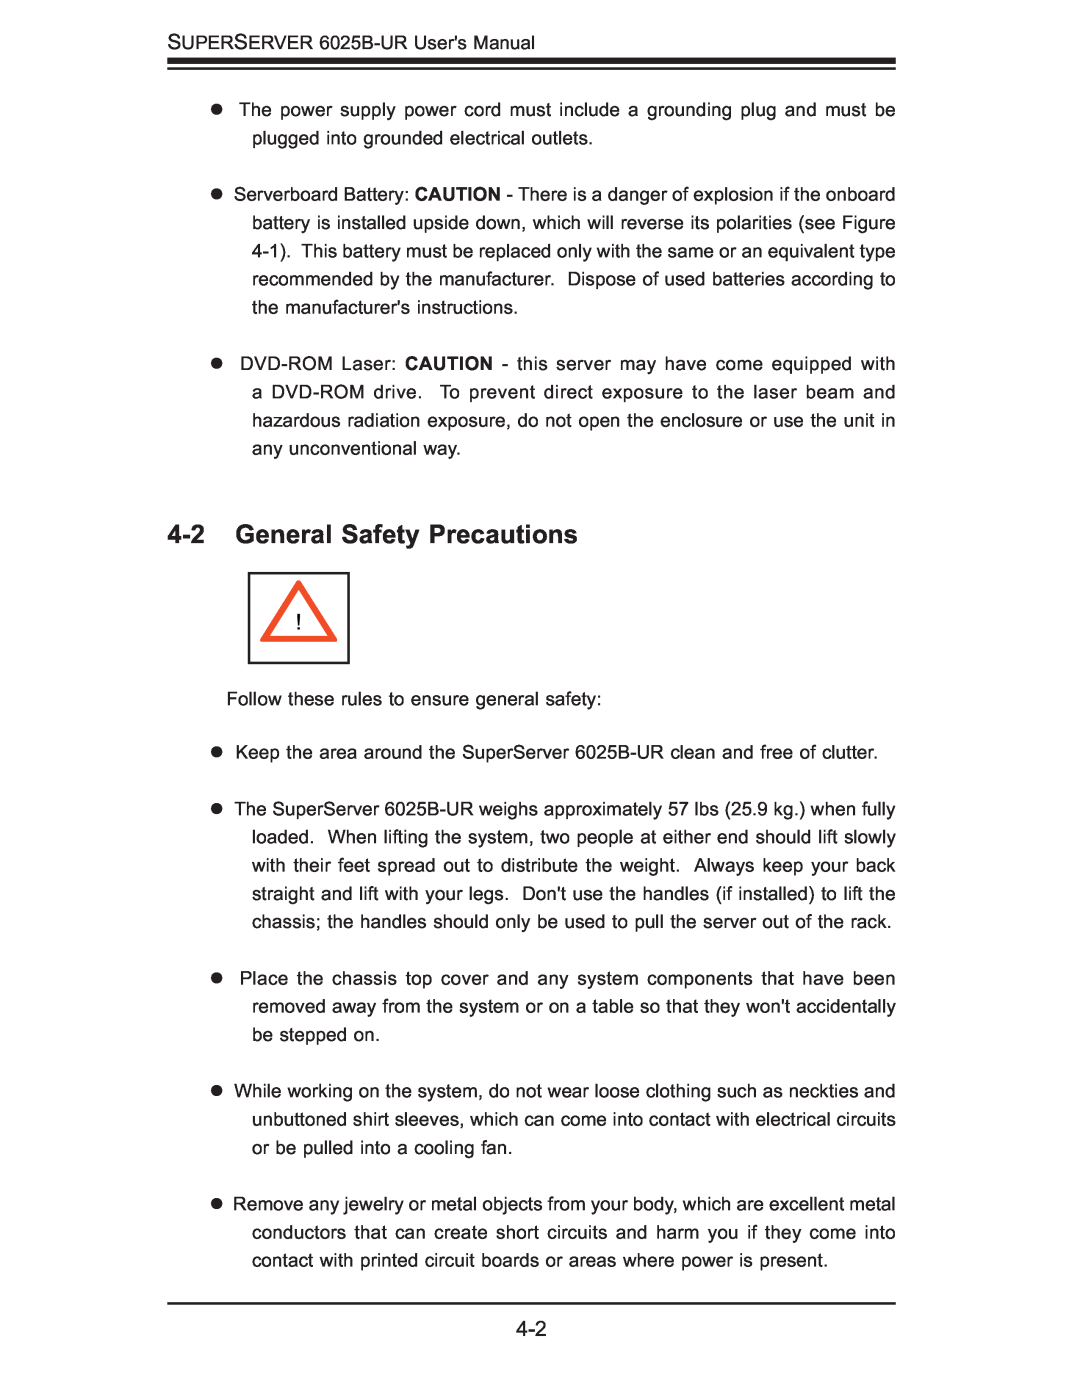 SUPER MICRO Computer 6025B-UR user manual General Safety Precautions 